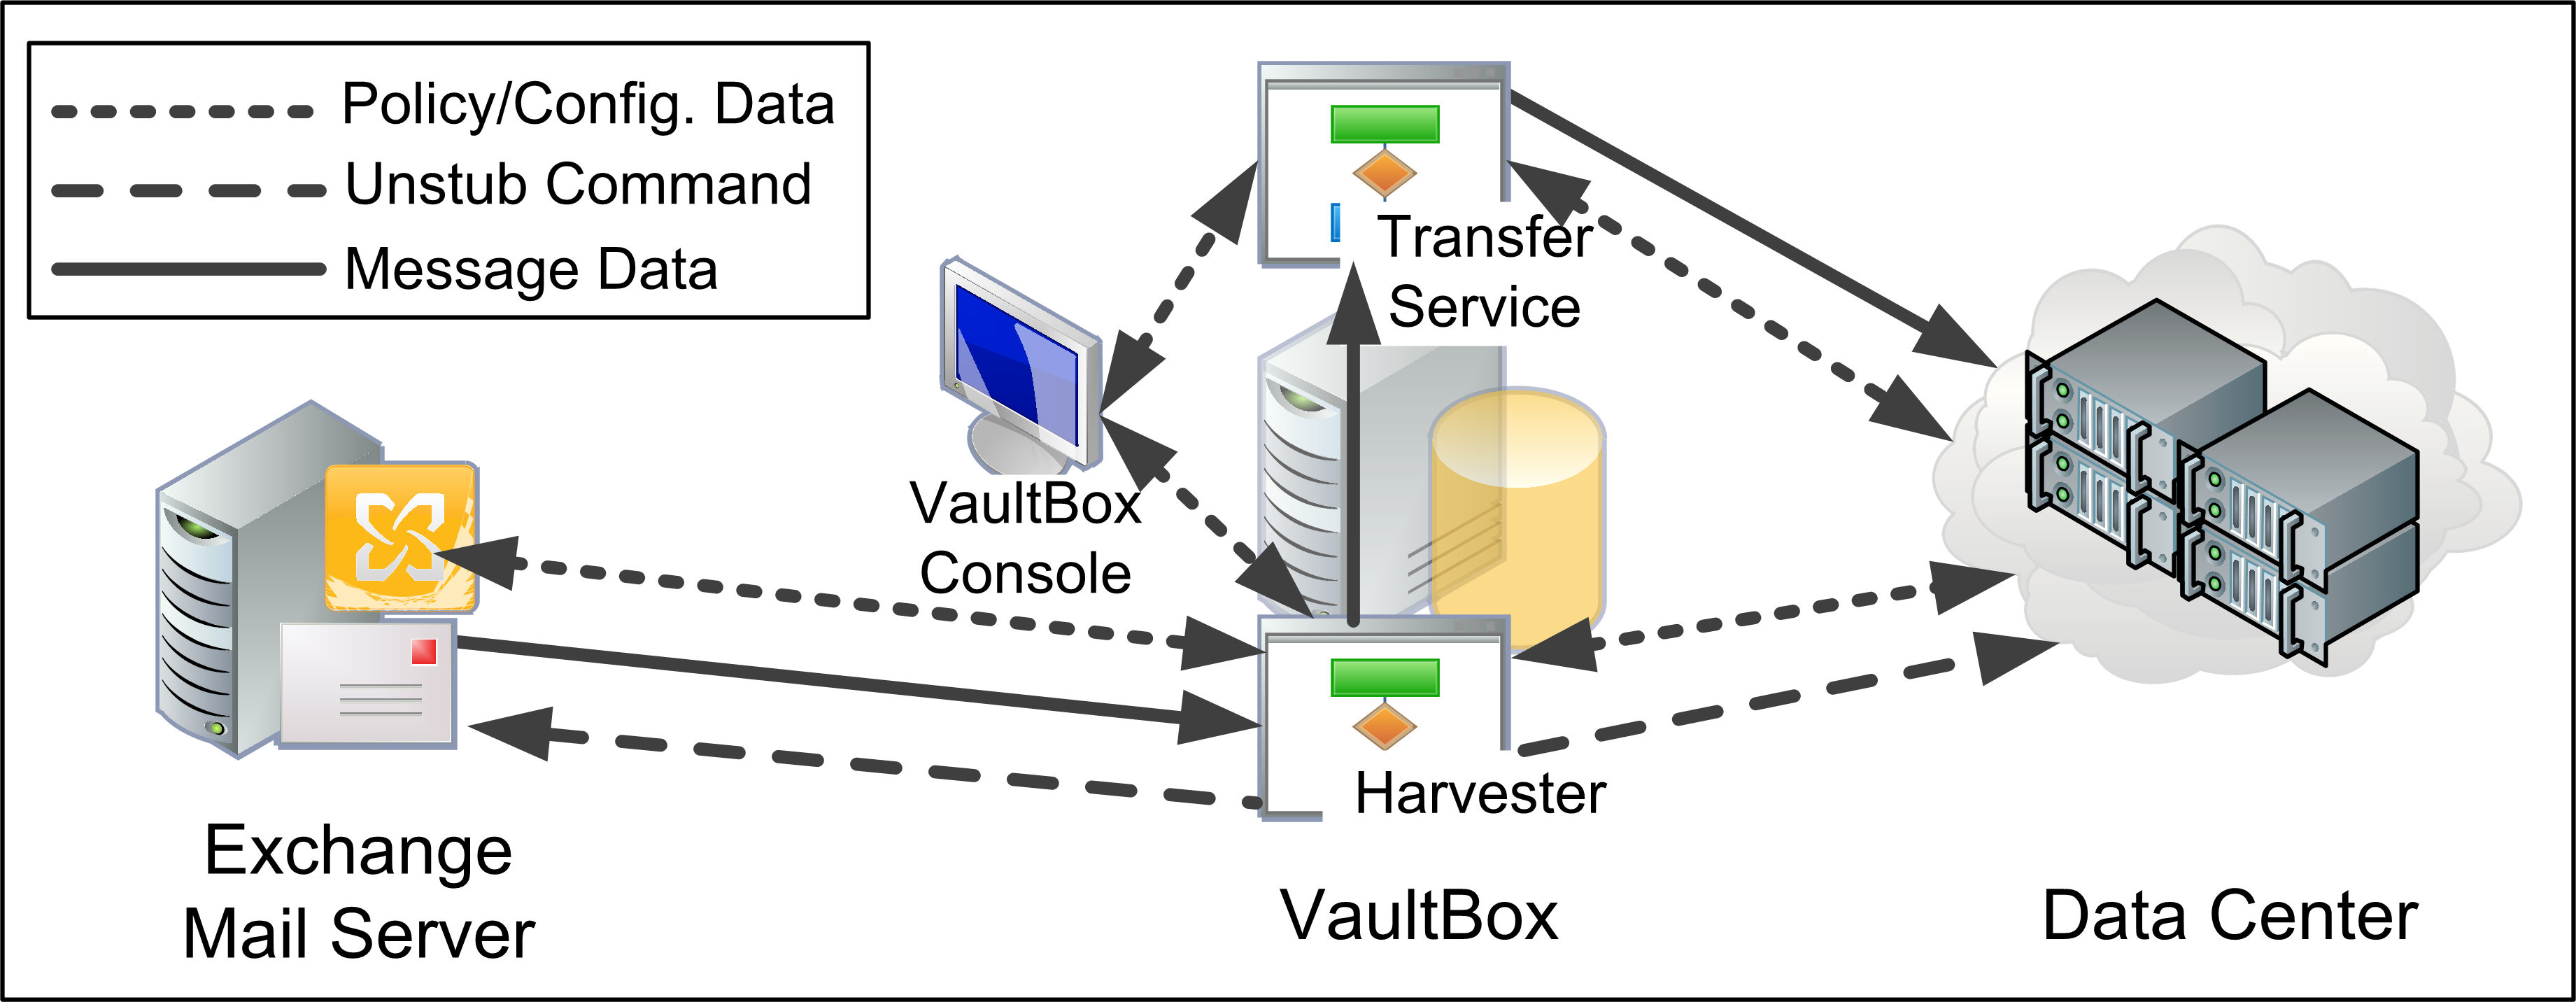 Storage and data transfer 